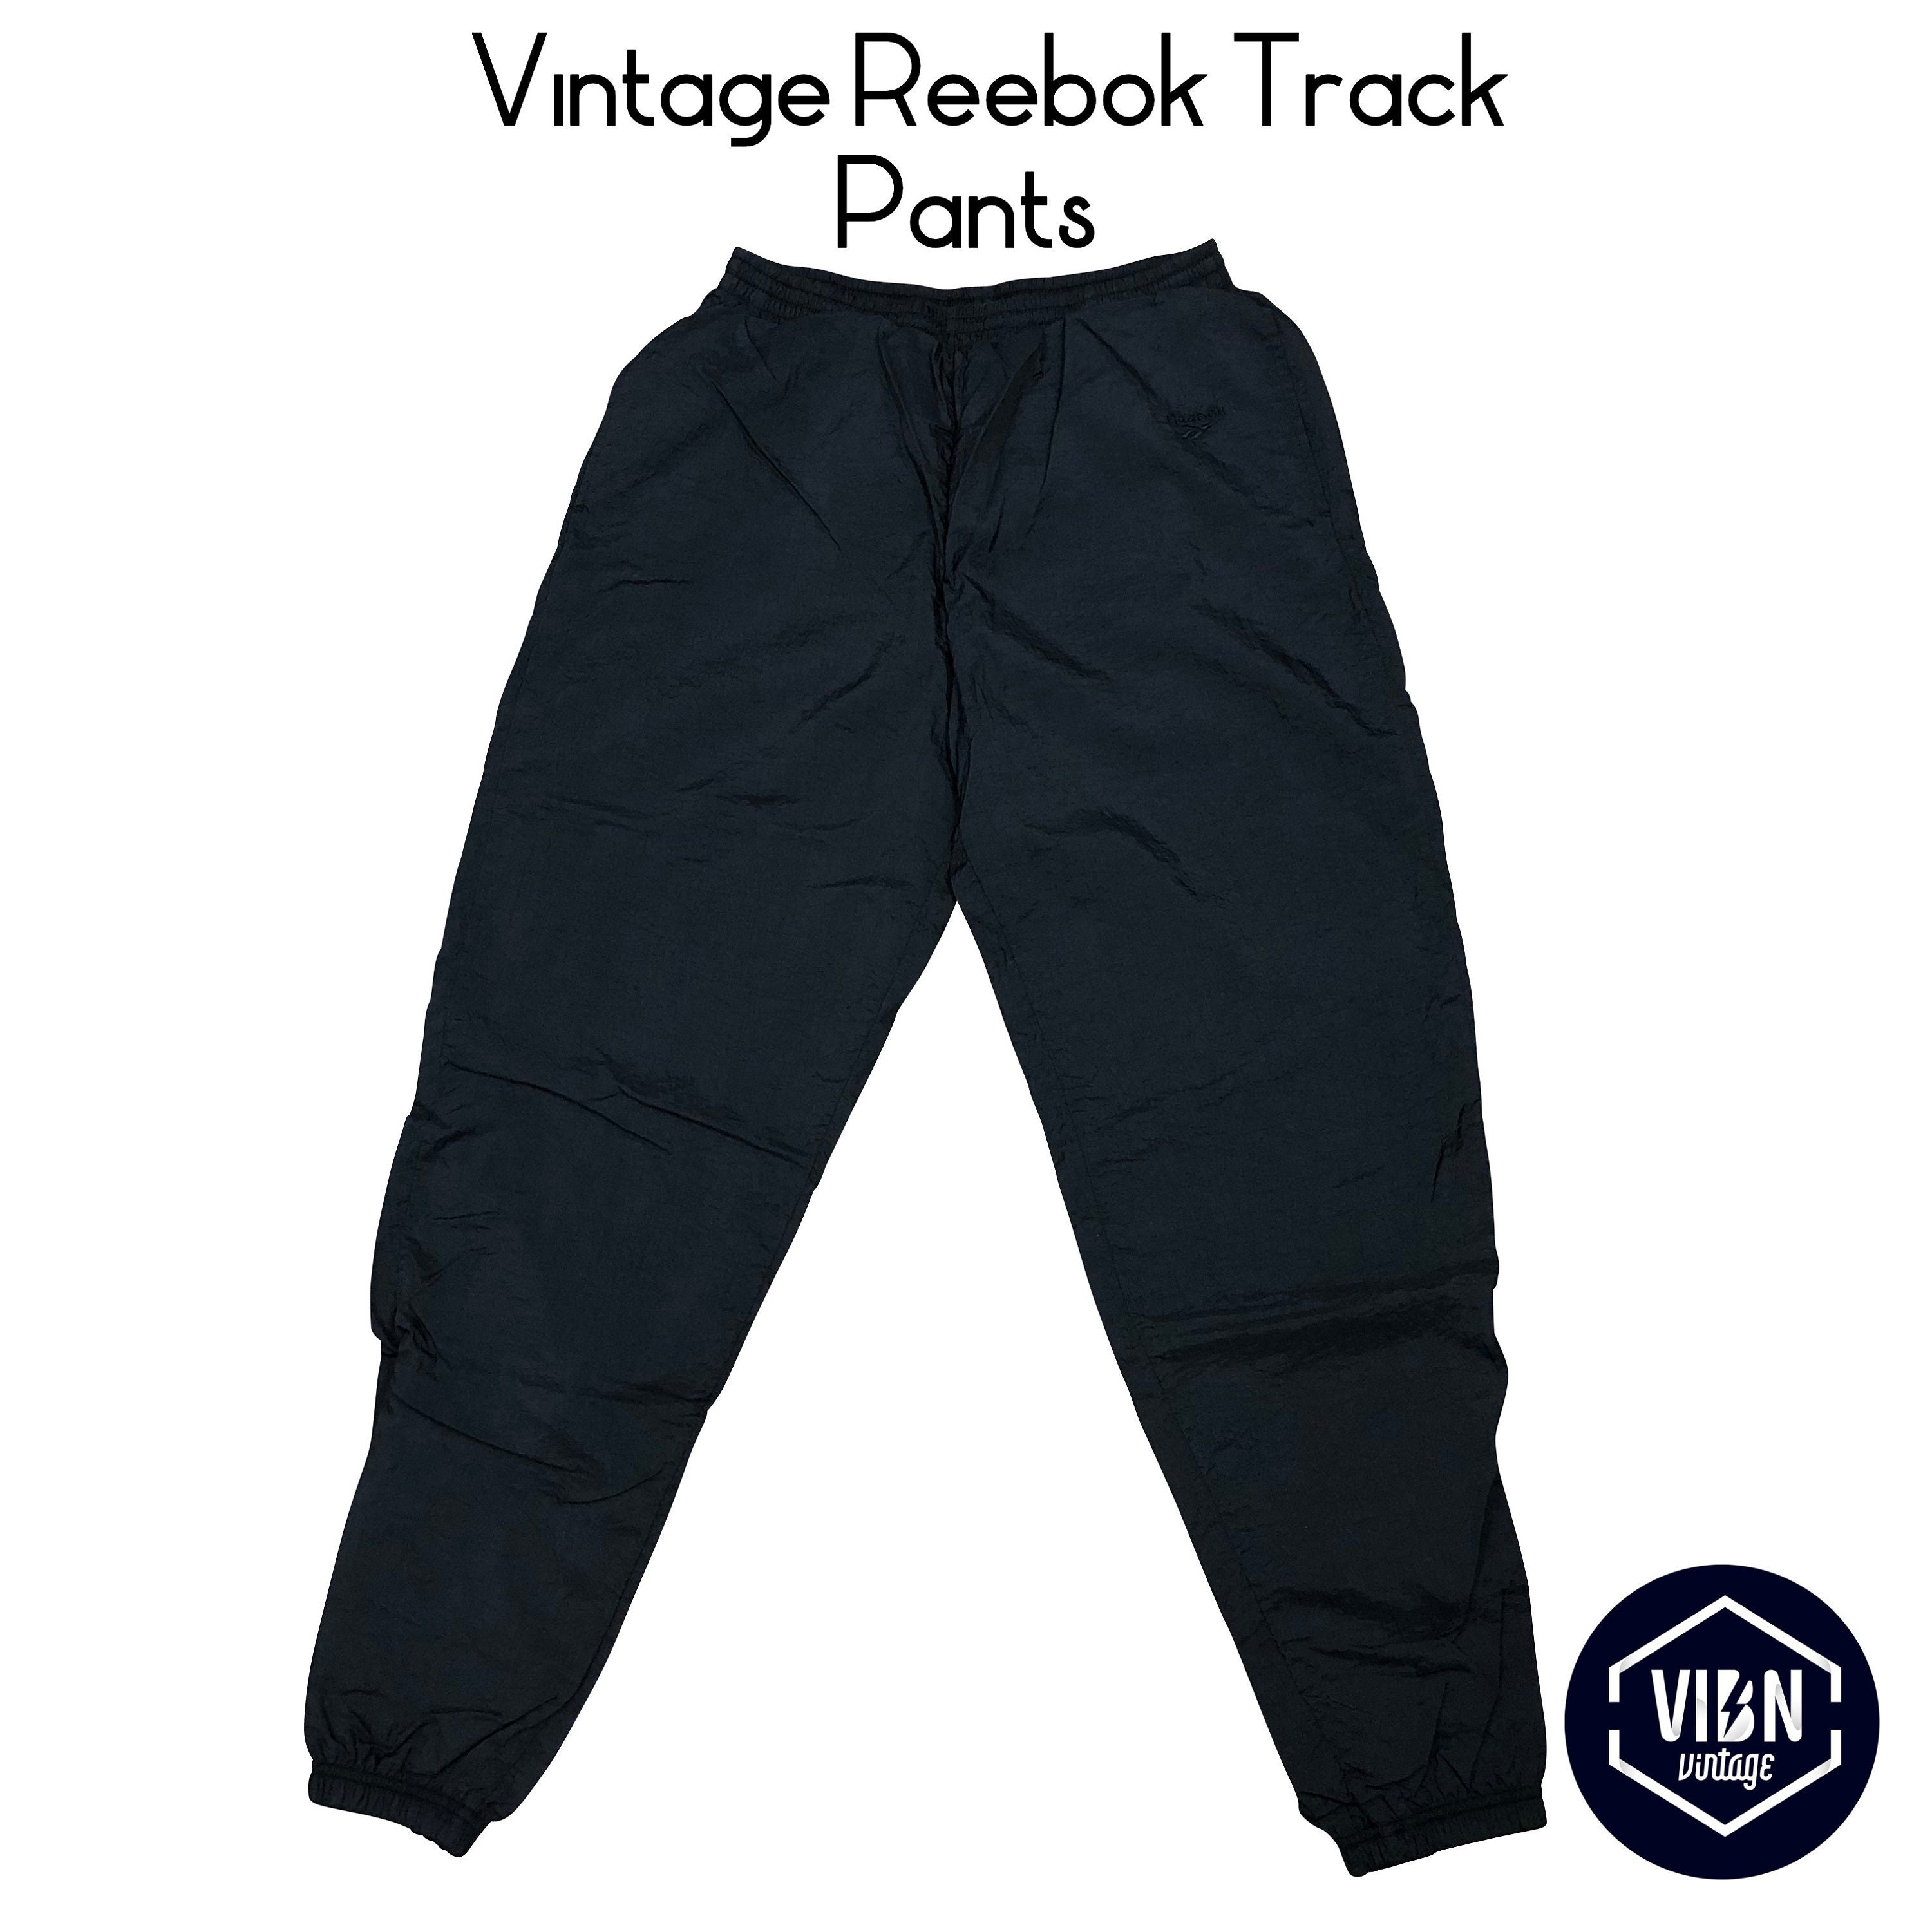 reebok vintage track pants